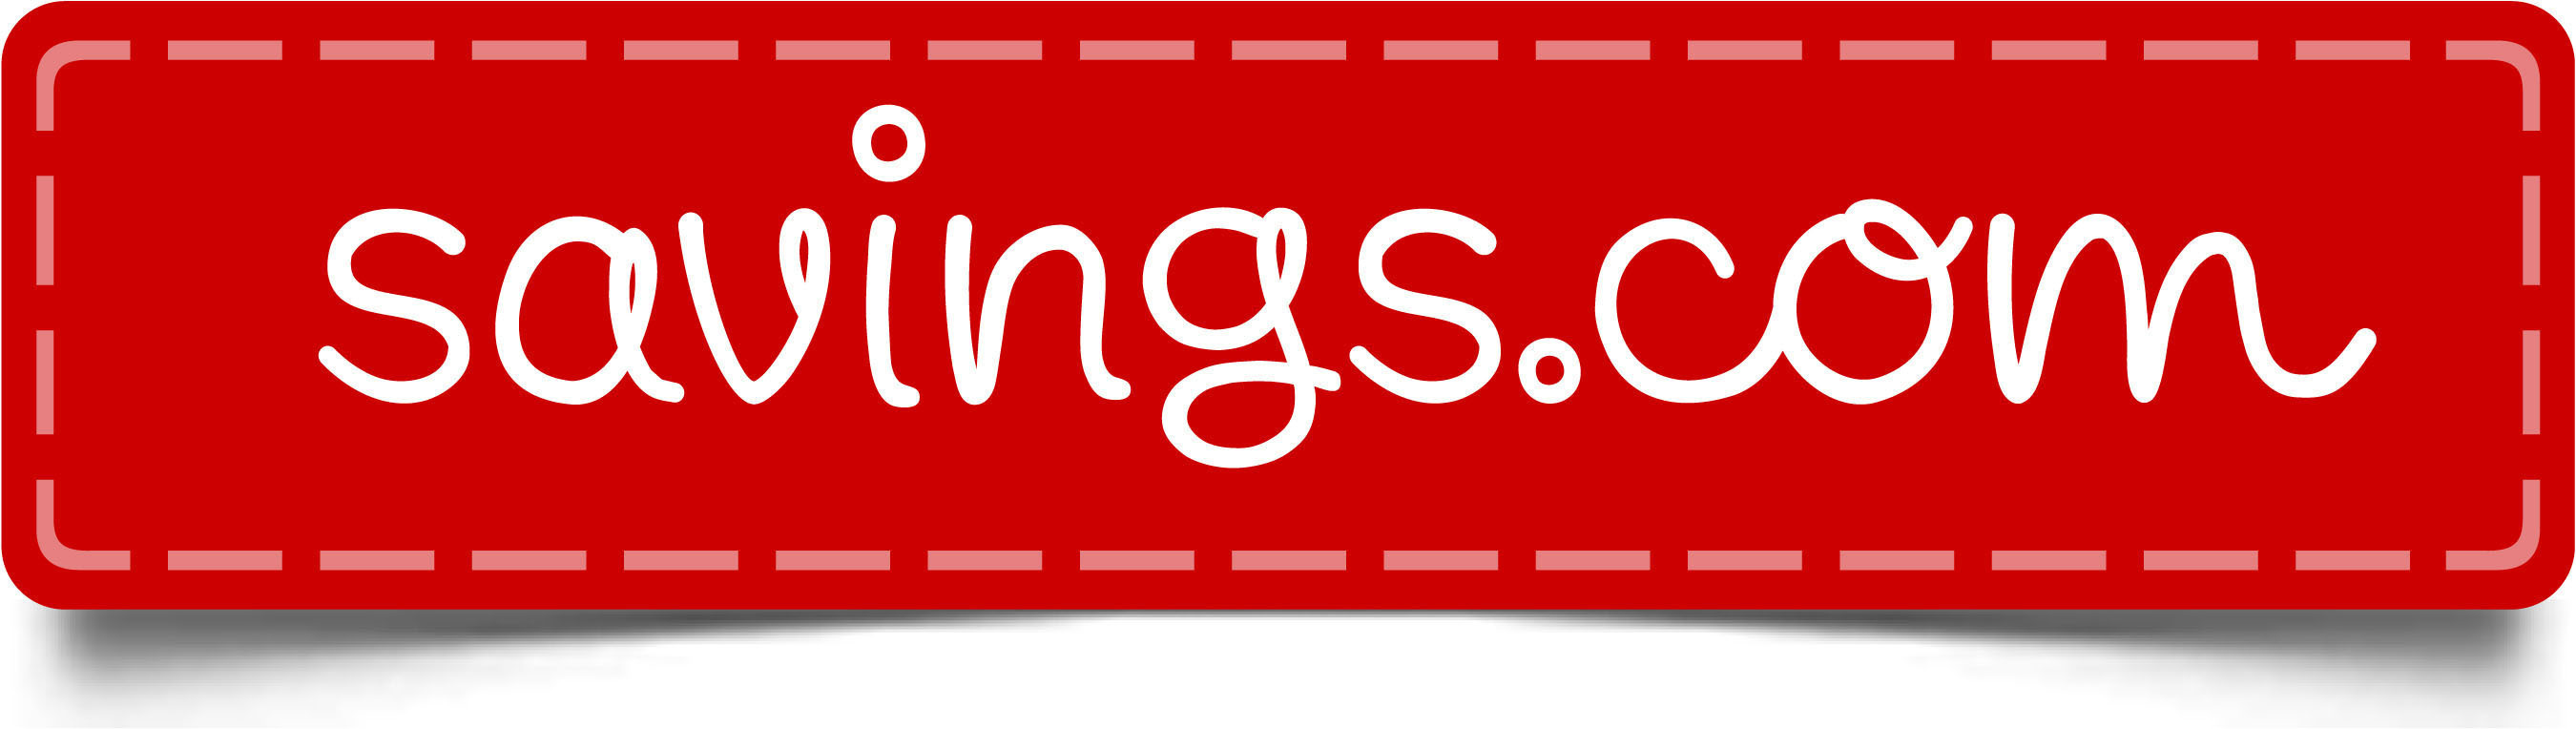 Savings.com logo.